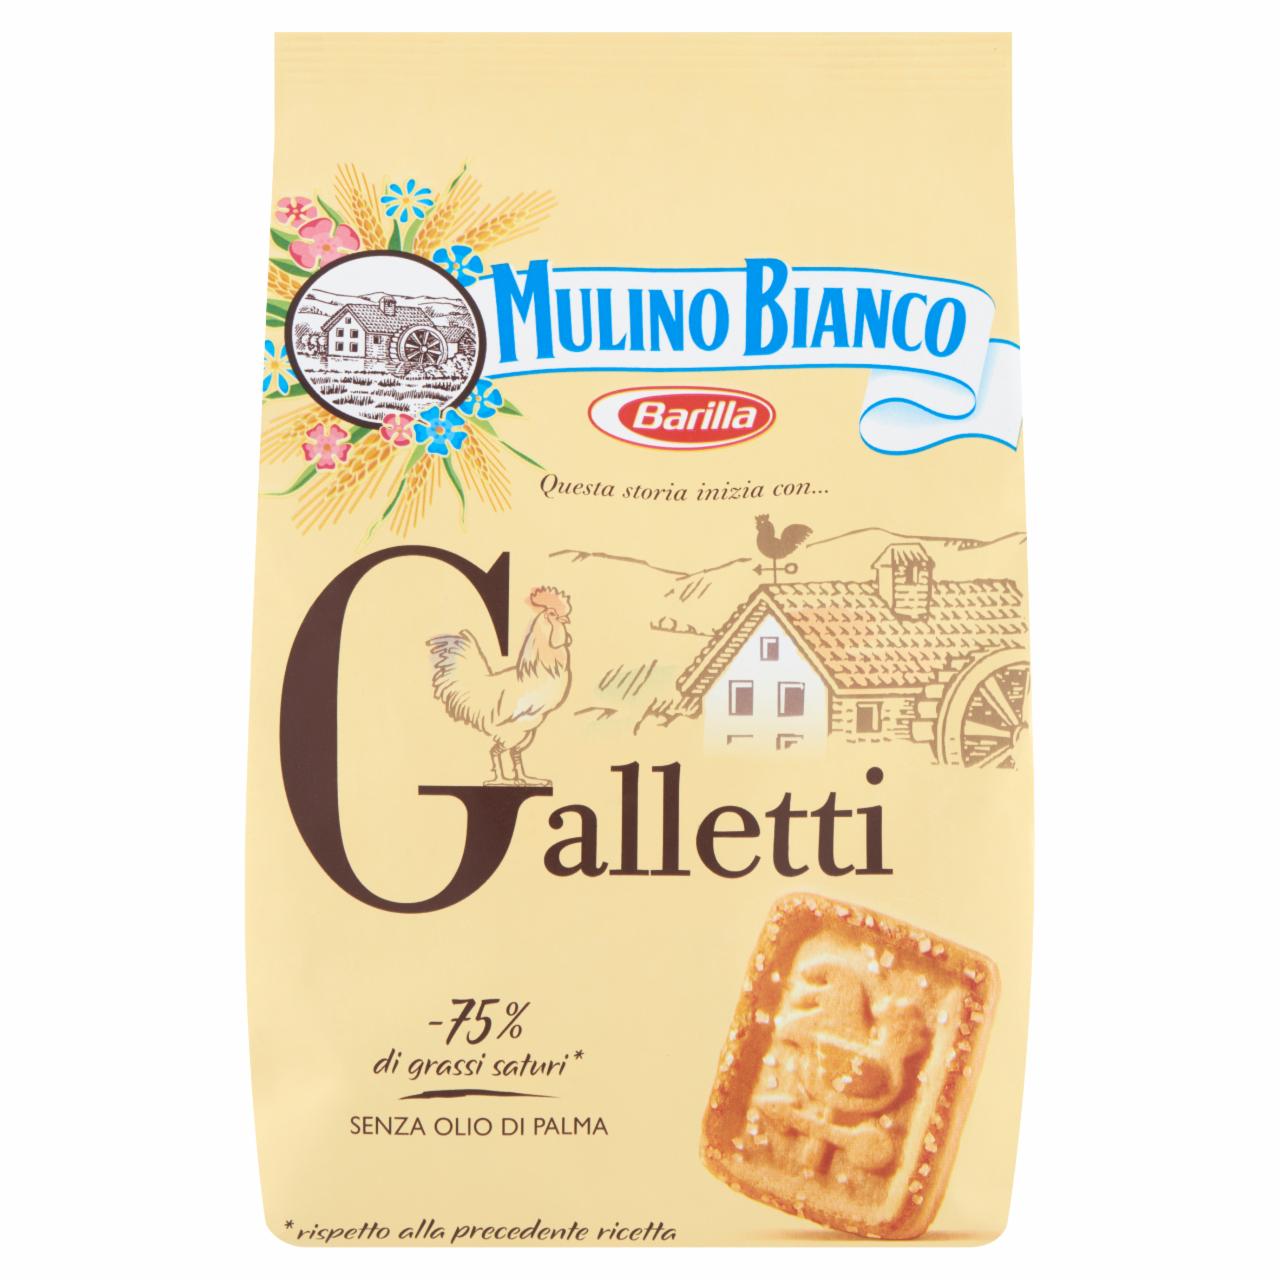 Képek - Mulino Bianco Galletti édes keksz cukorkristályokkal 400 g